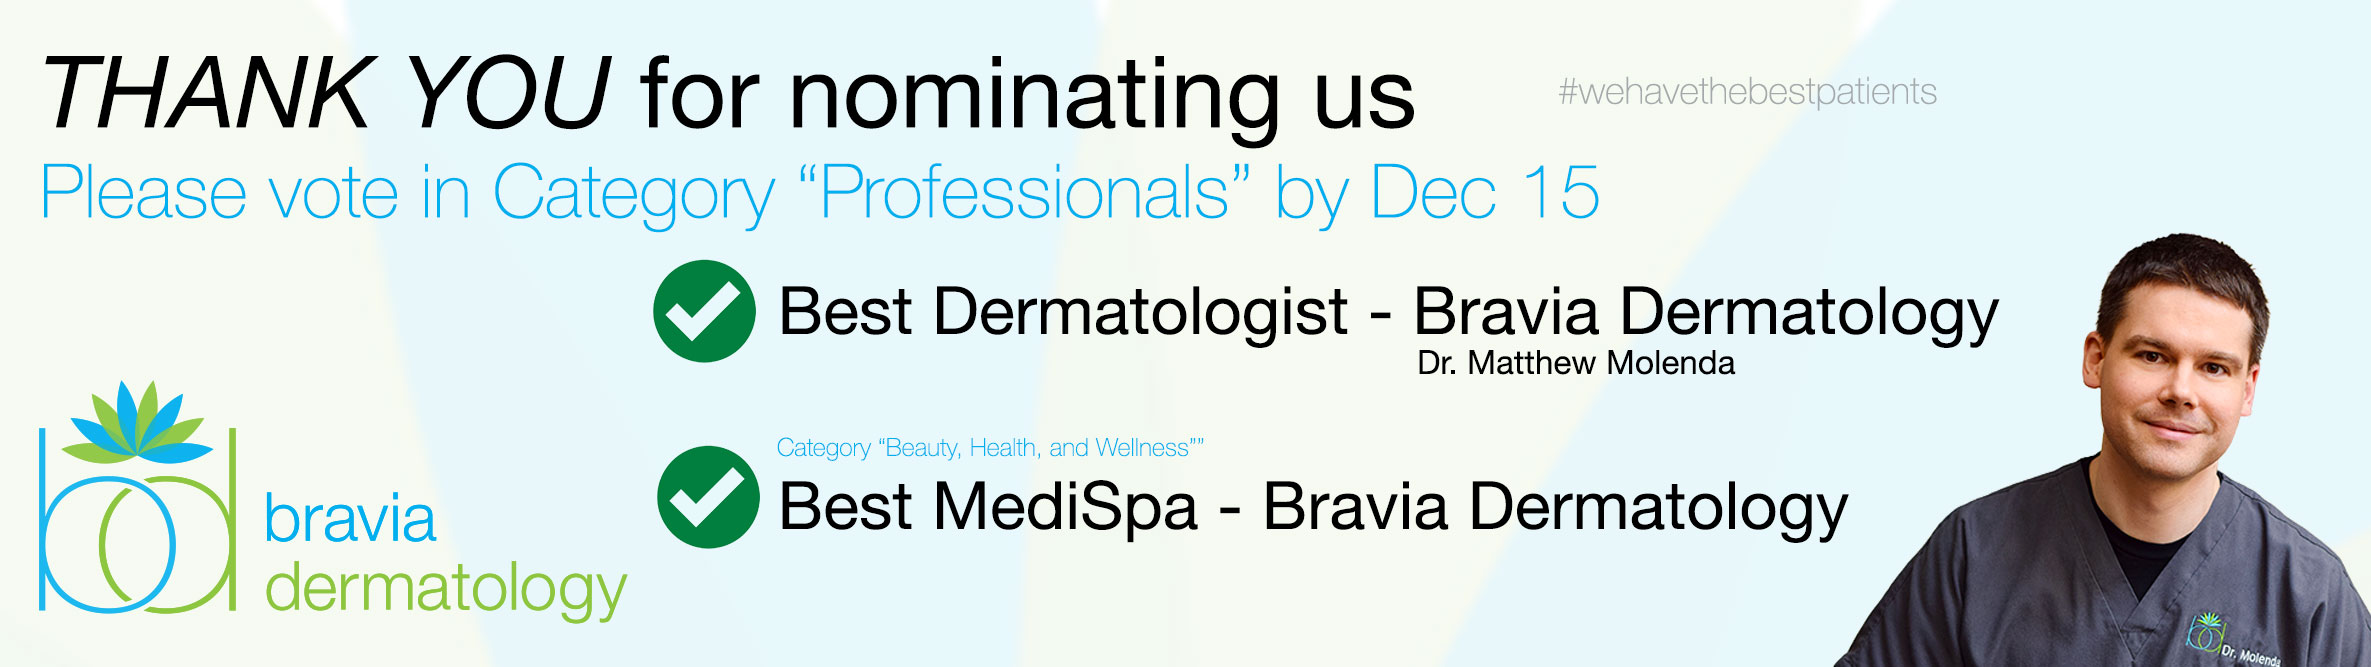 Vote for Bravia Dermatology Best of Toledo!